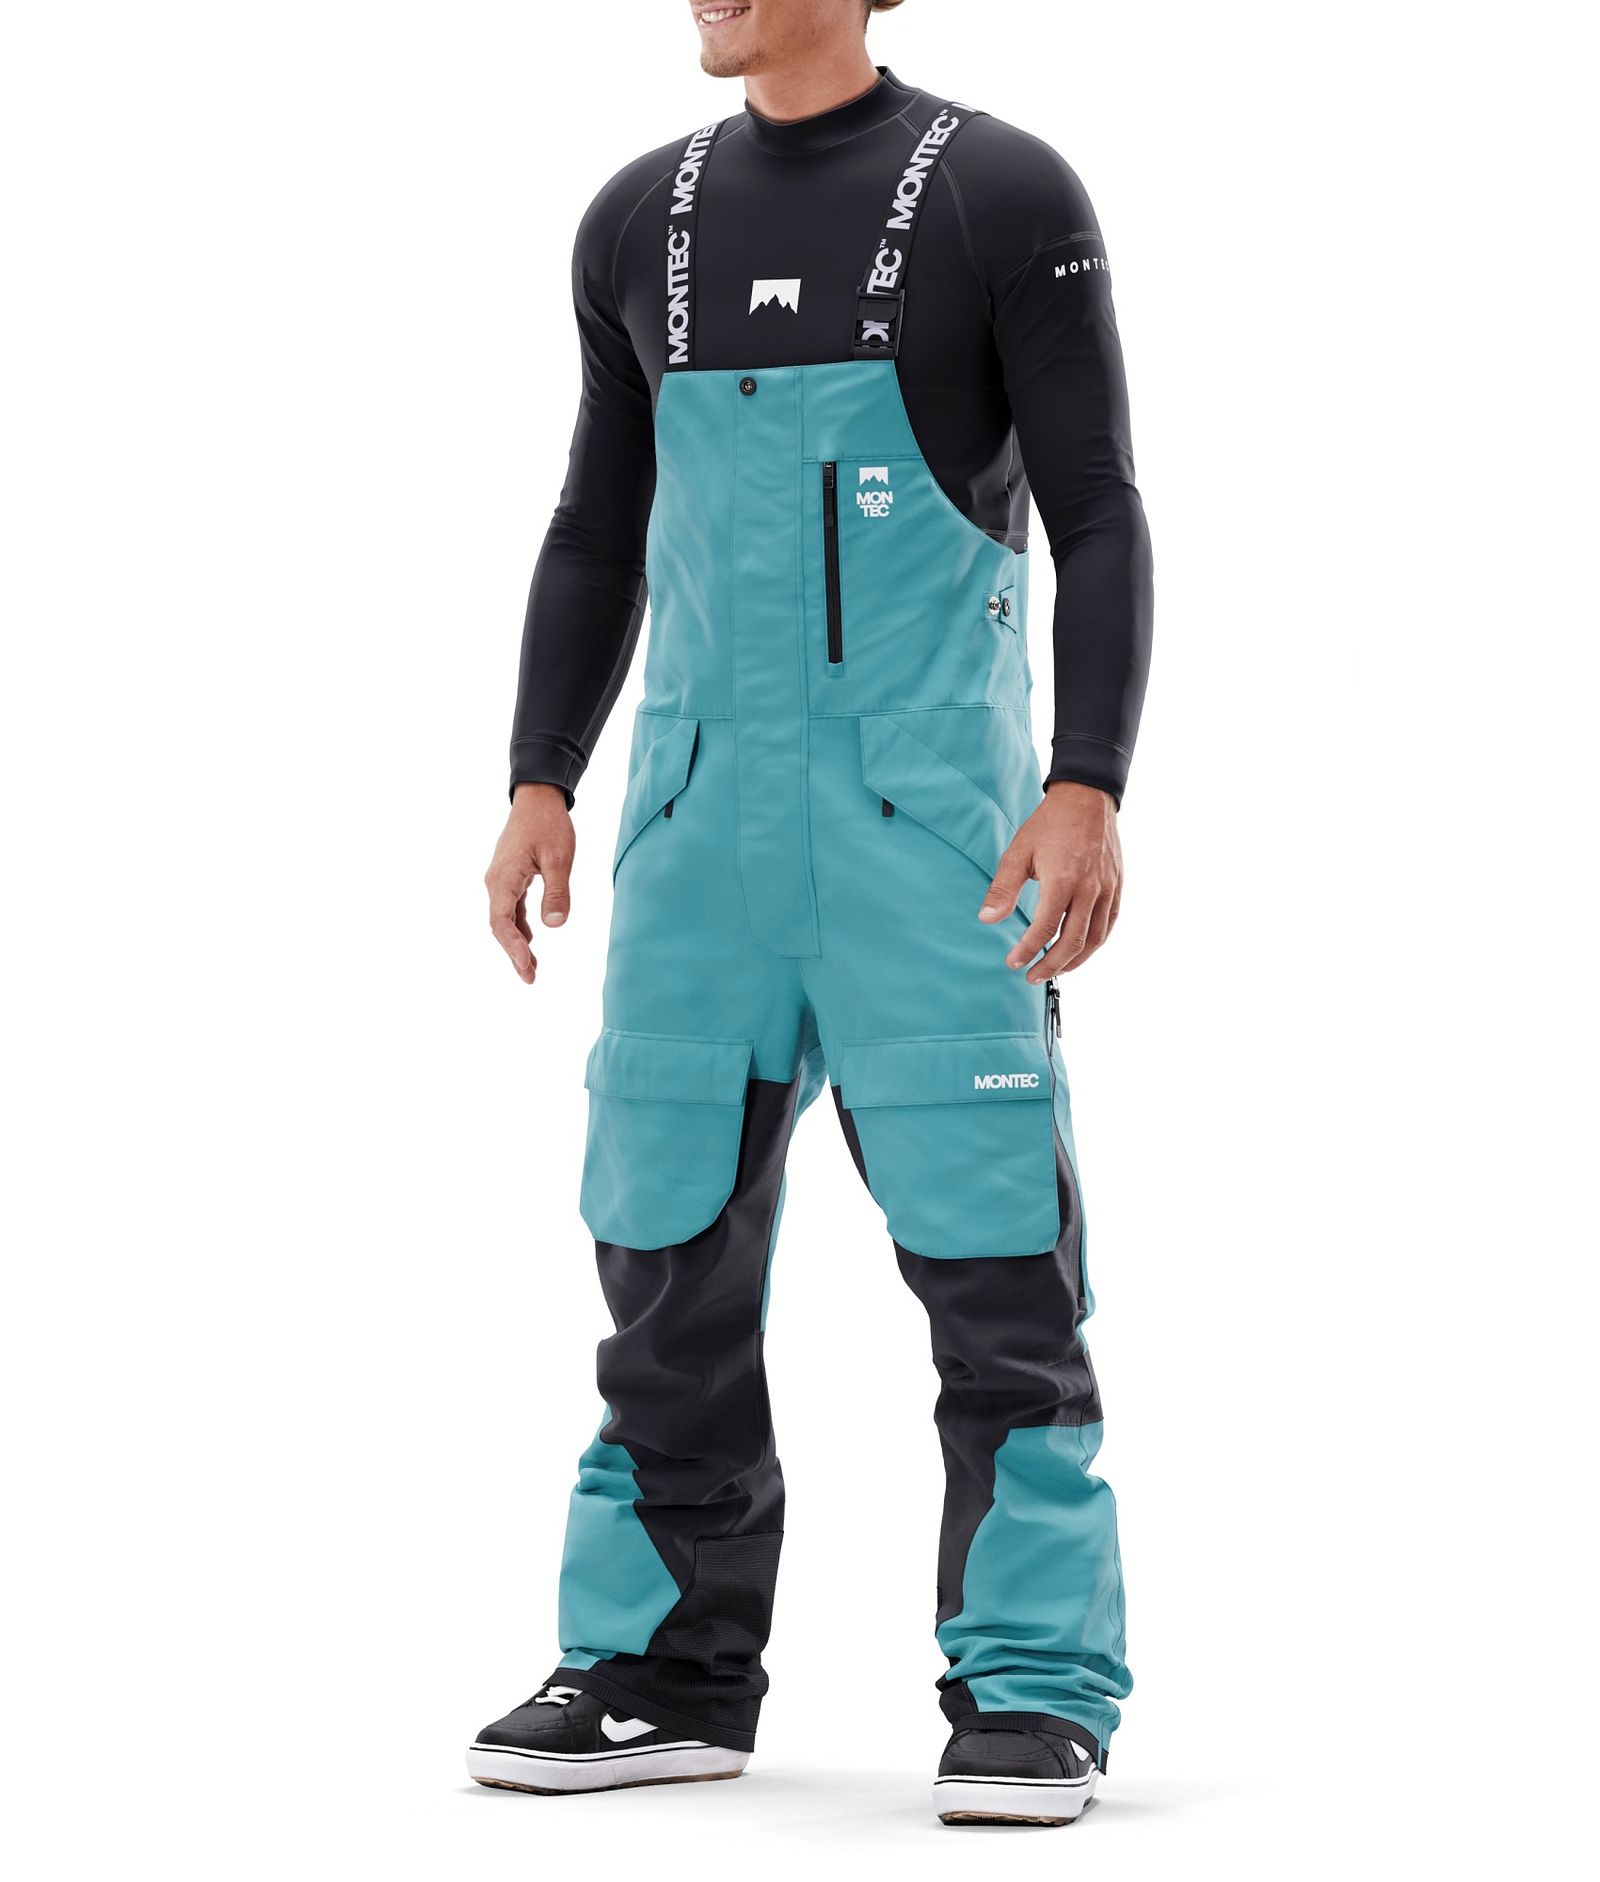 Dope Iconic 2021 Snowboard Pants Men Khaki